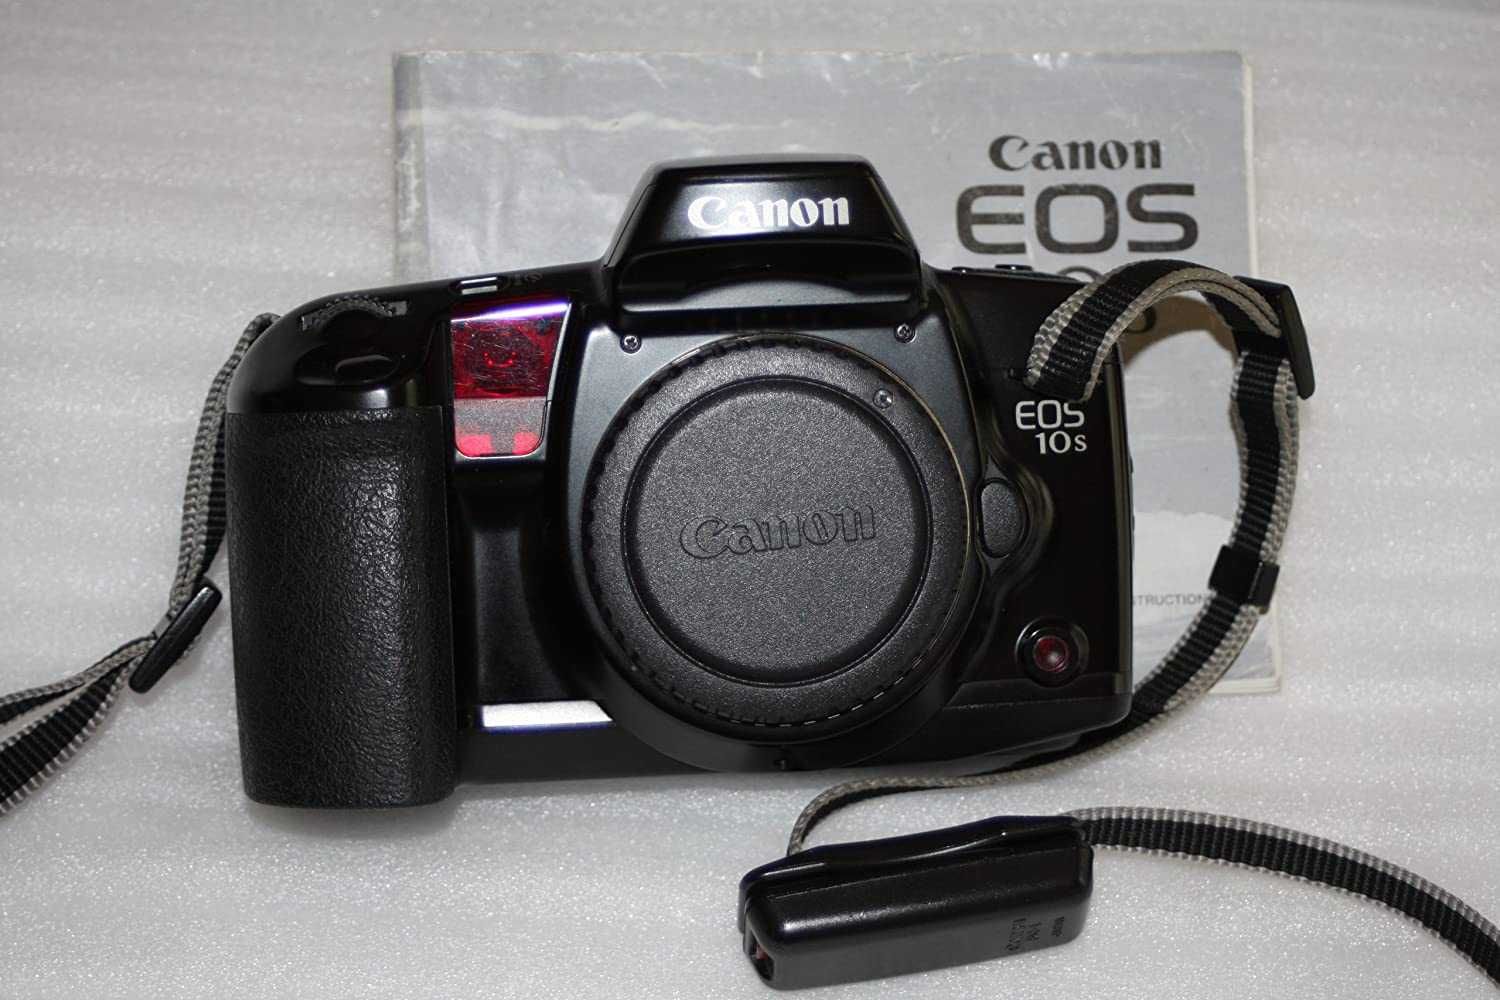 Máquina foto Canon EO10 reflex analógica;Panasonic FZ30 bridge digital